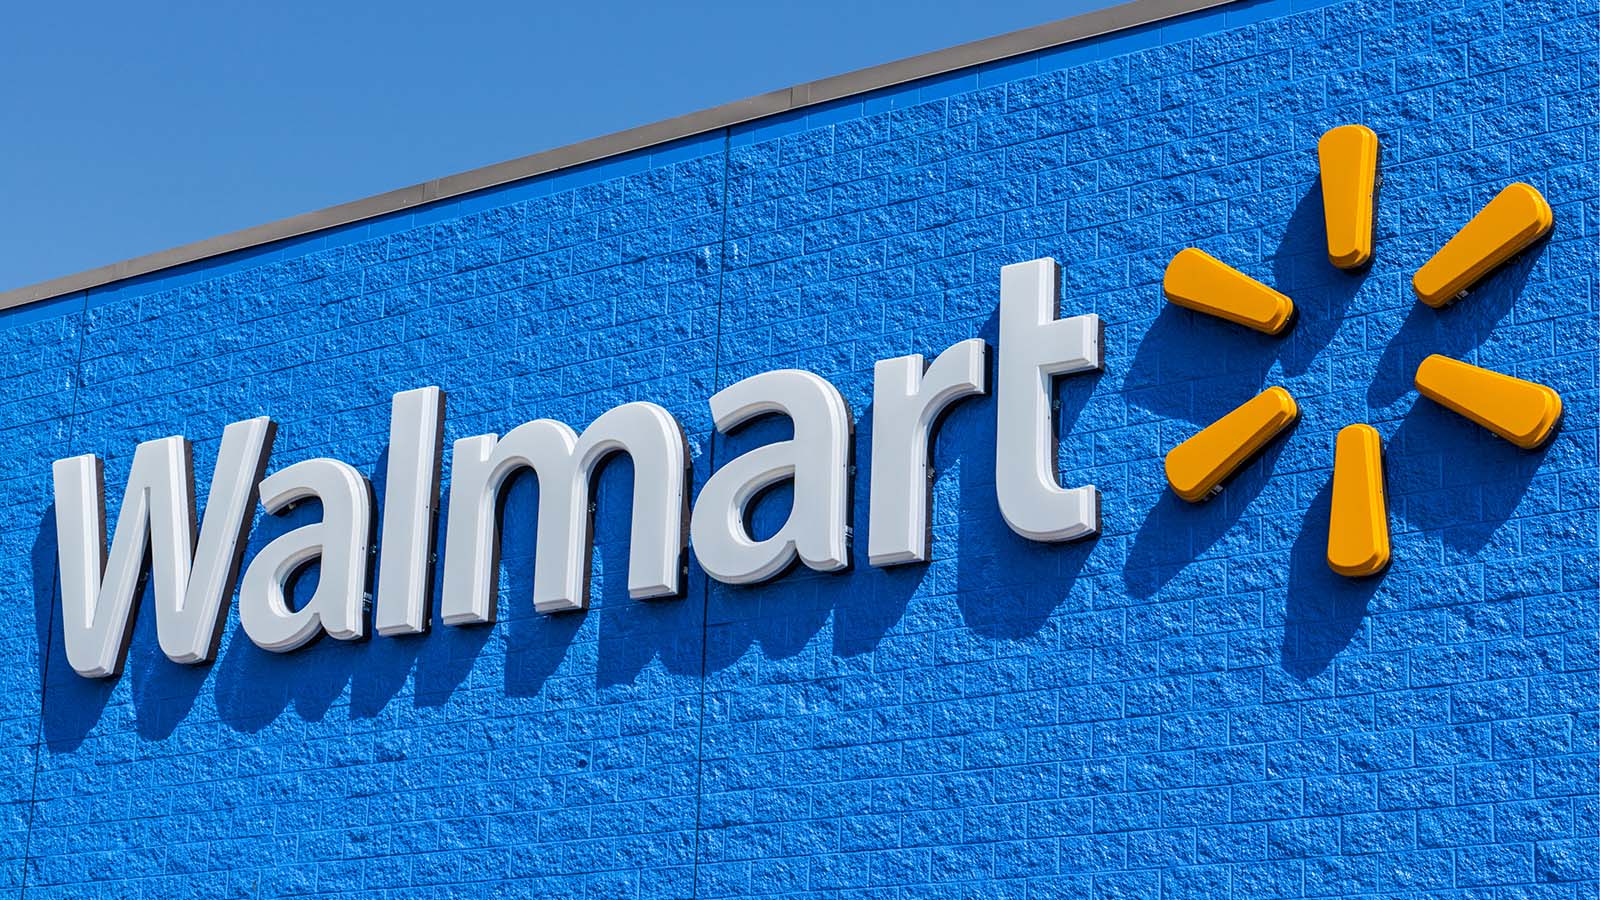 Walmart logo on store front